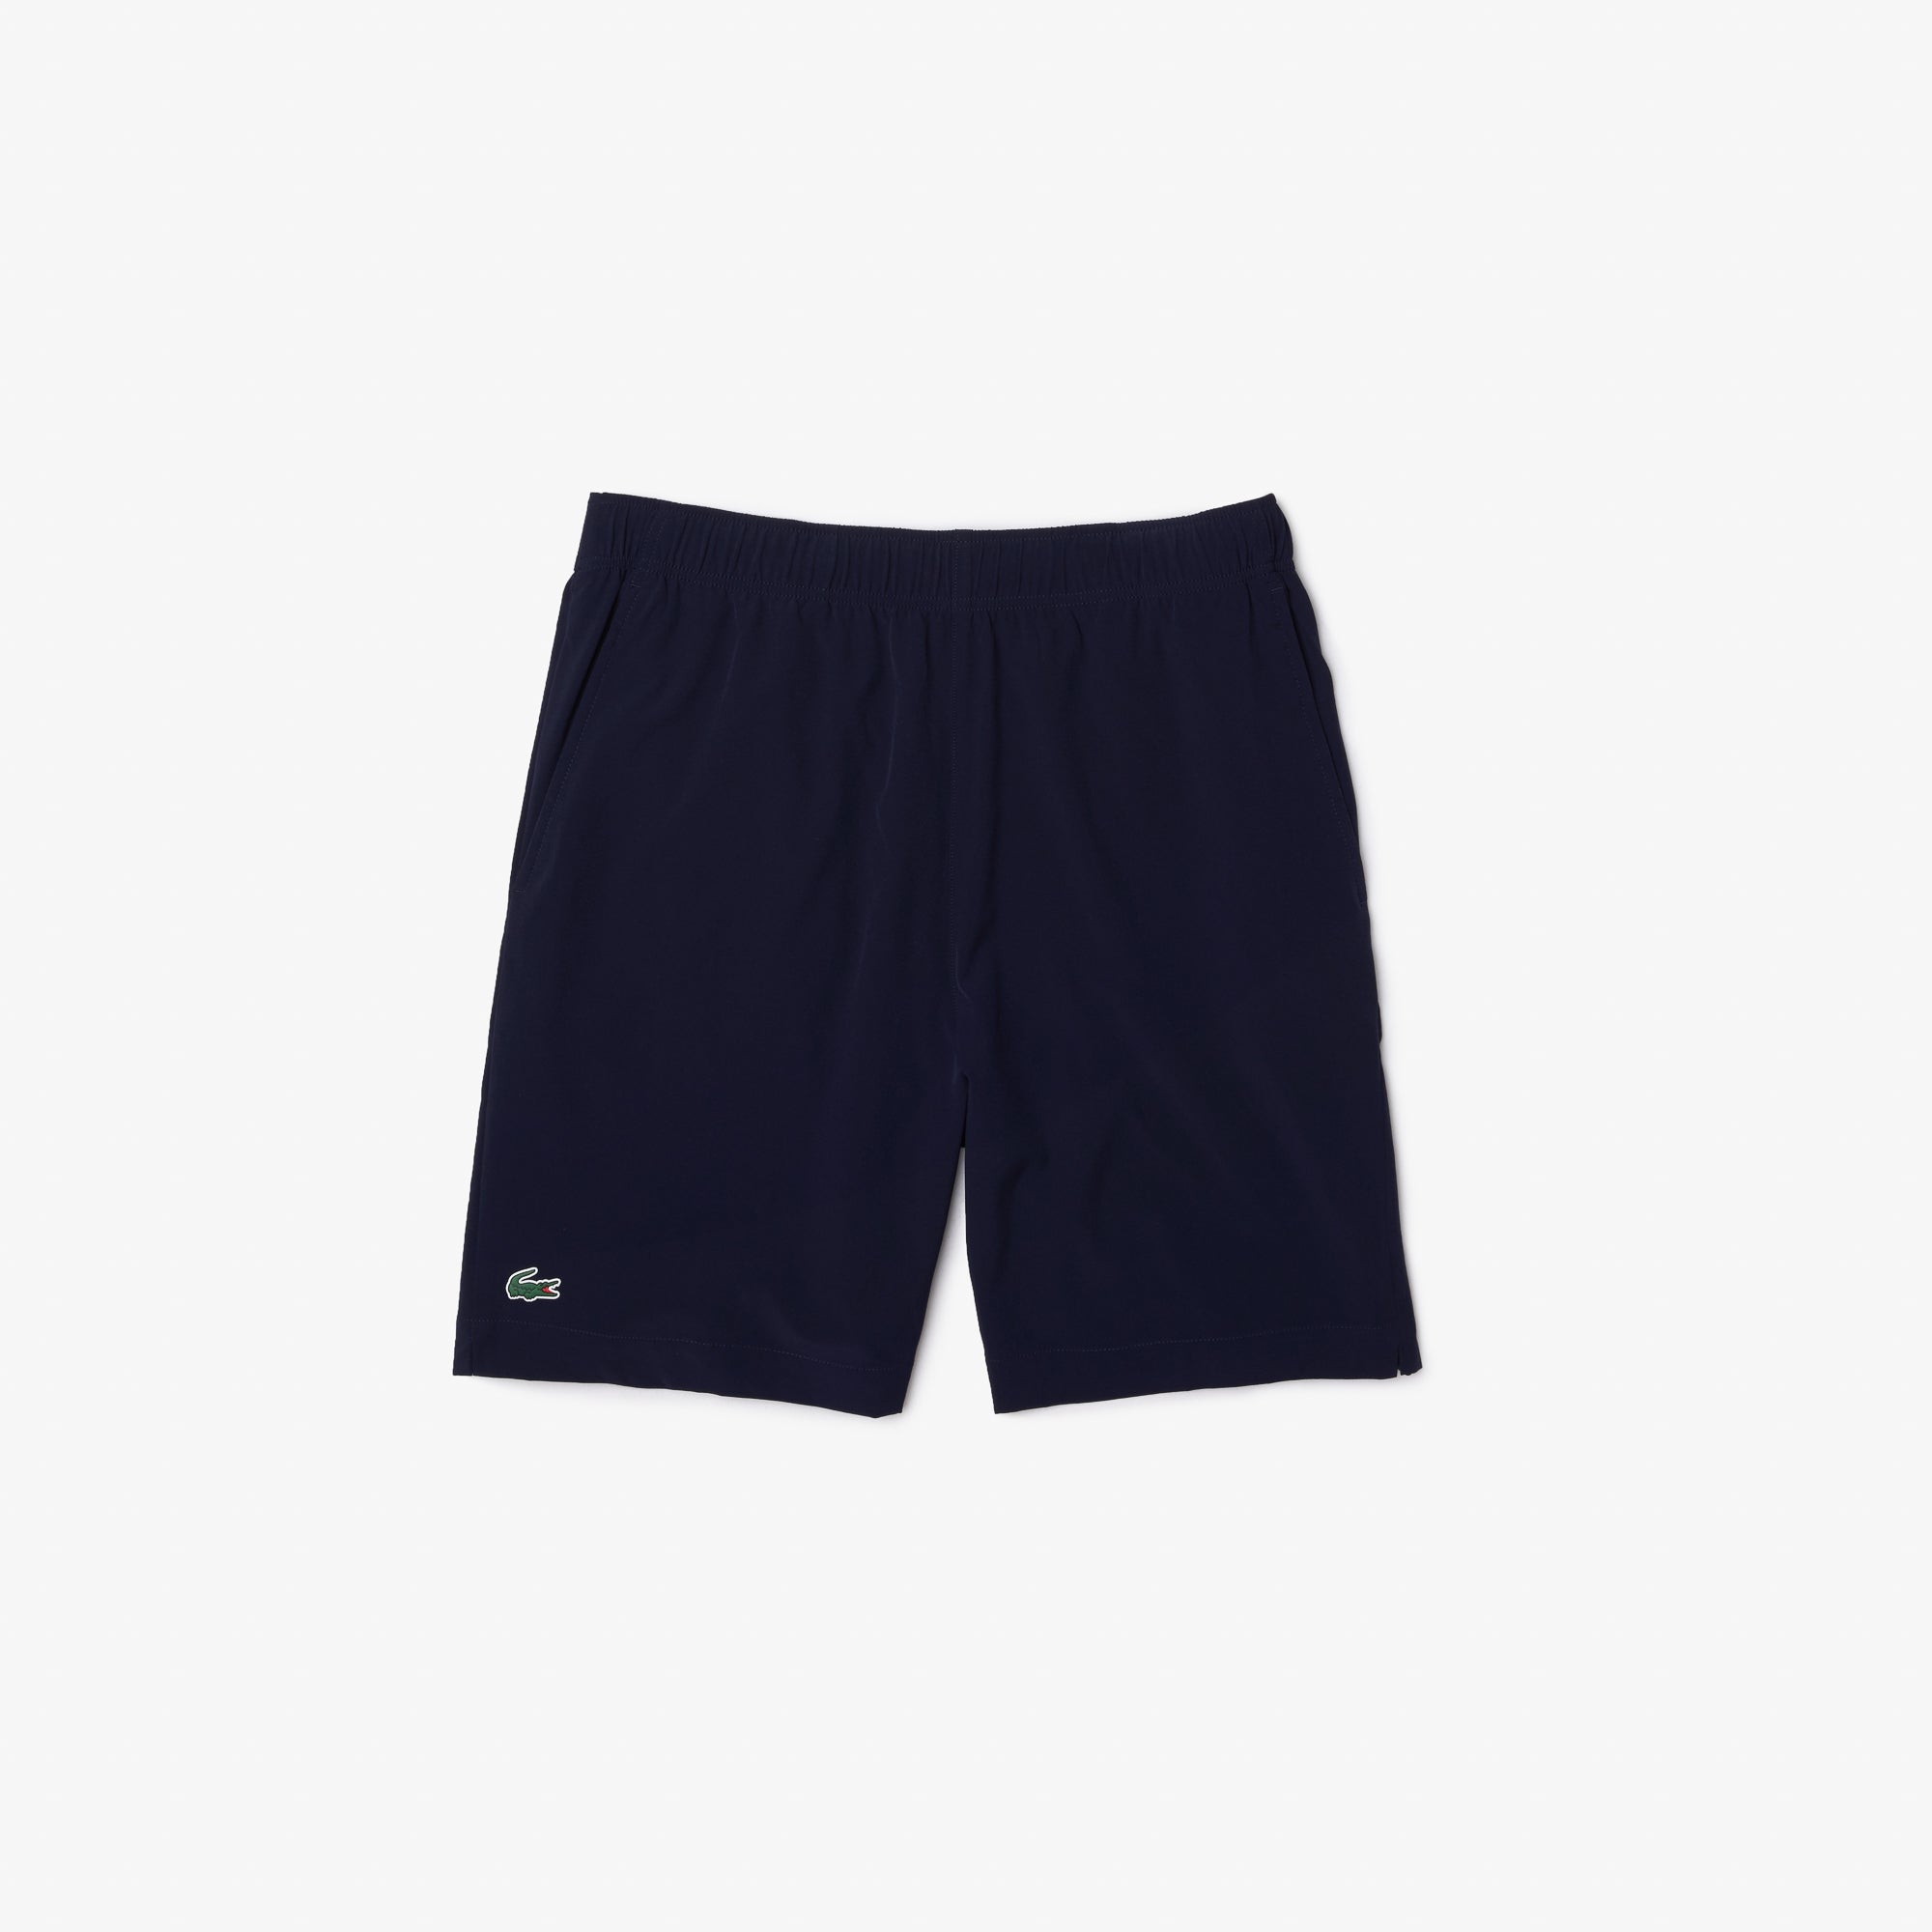 Se Lacoste Shorts (Navy) - L hos Padellife